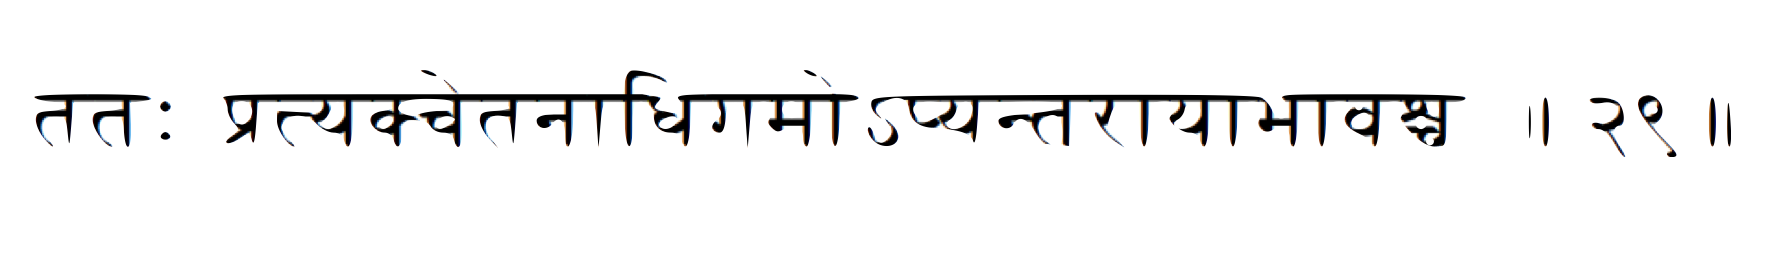 sutra 29 tatah pratyakchetanadhigamo-apyantaraayabhaavashcha 